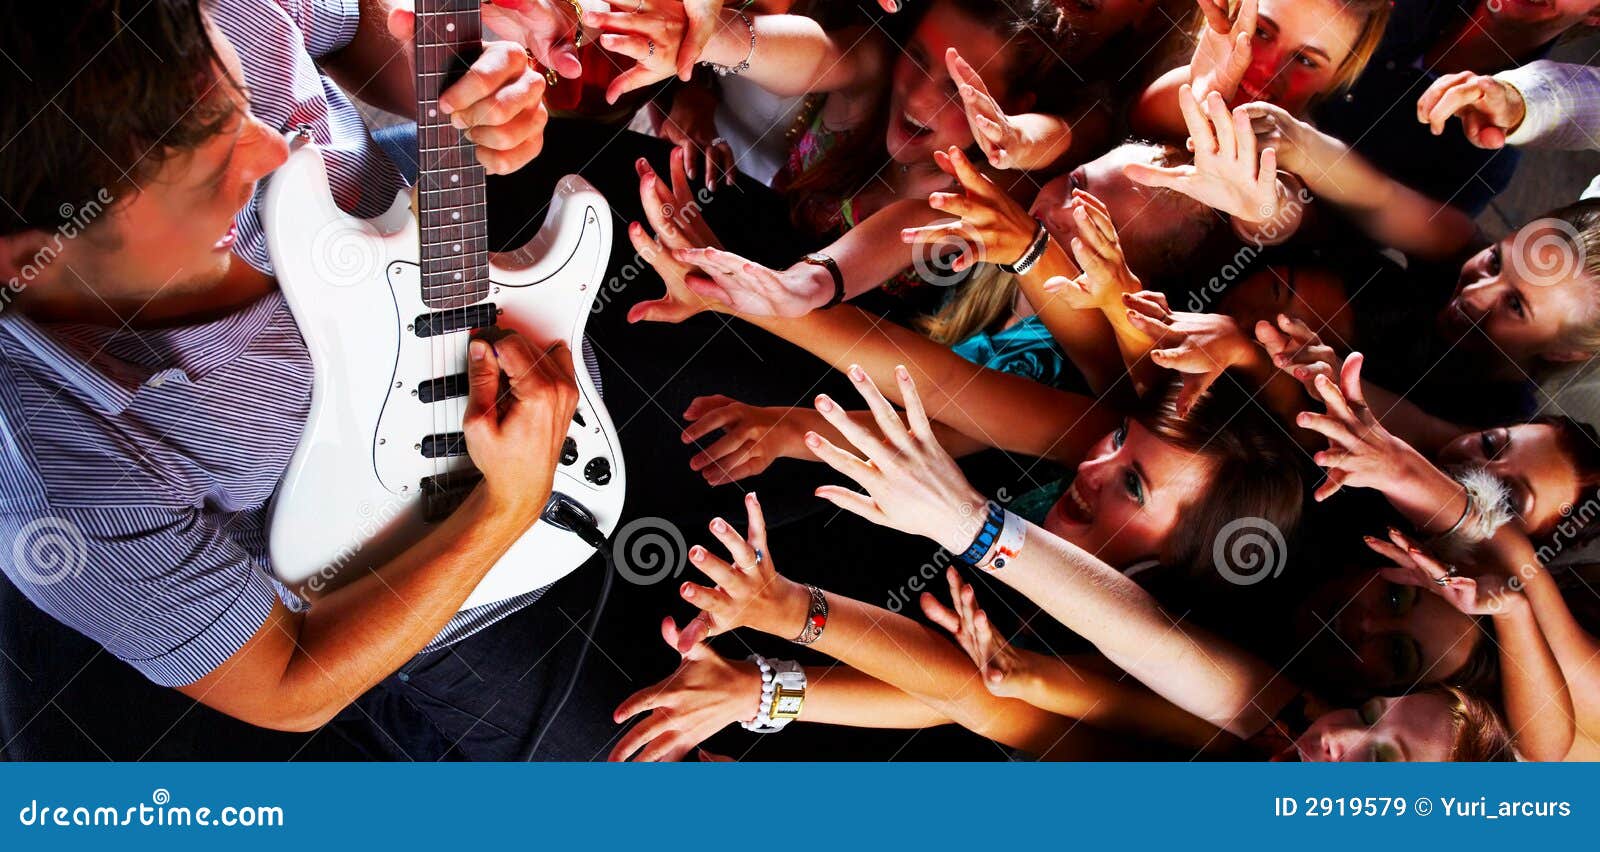 guitarsolo at a rock concert